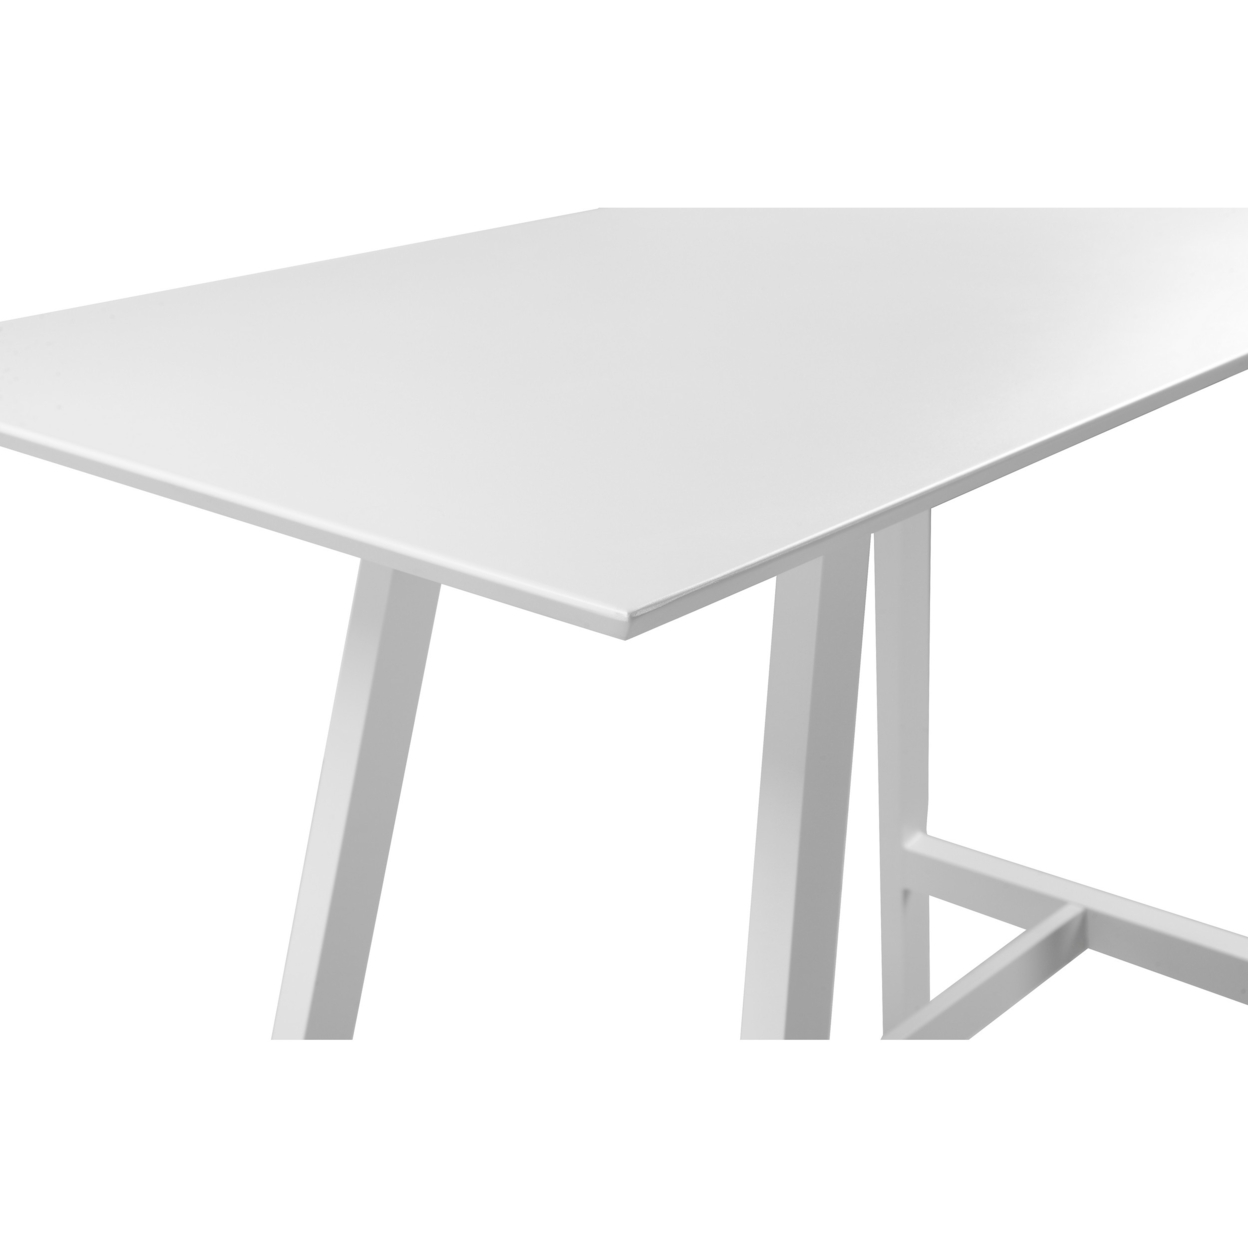 Keli 43 Inch Bar Table, Classic White Aluminum Frame, Rectanglular Top- Saltoro Sherpi